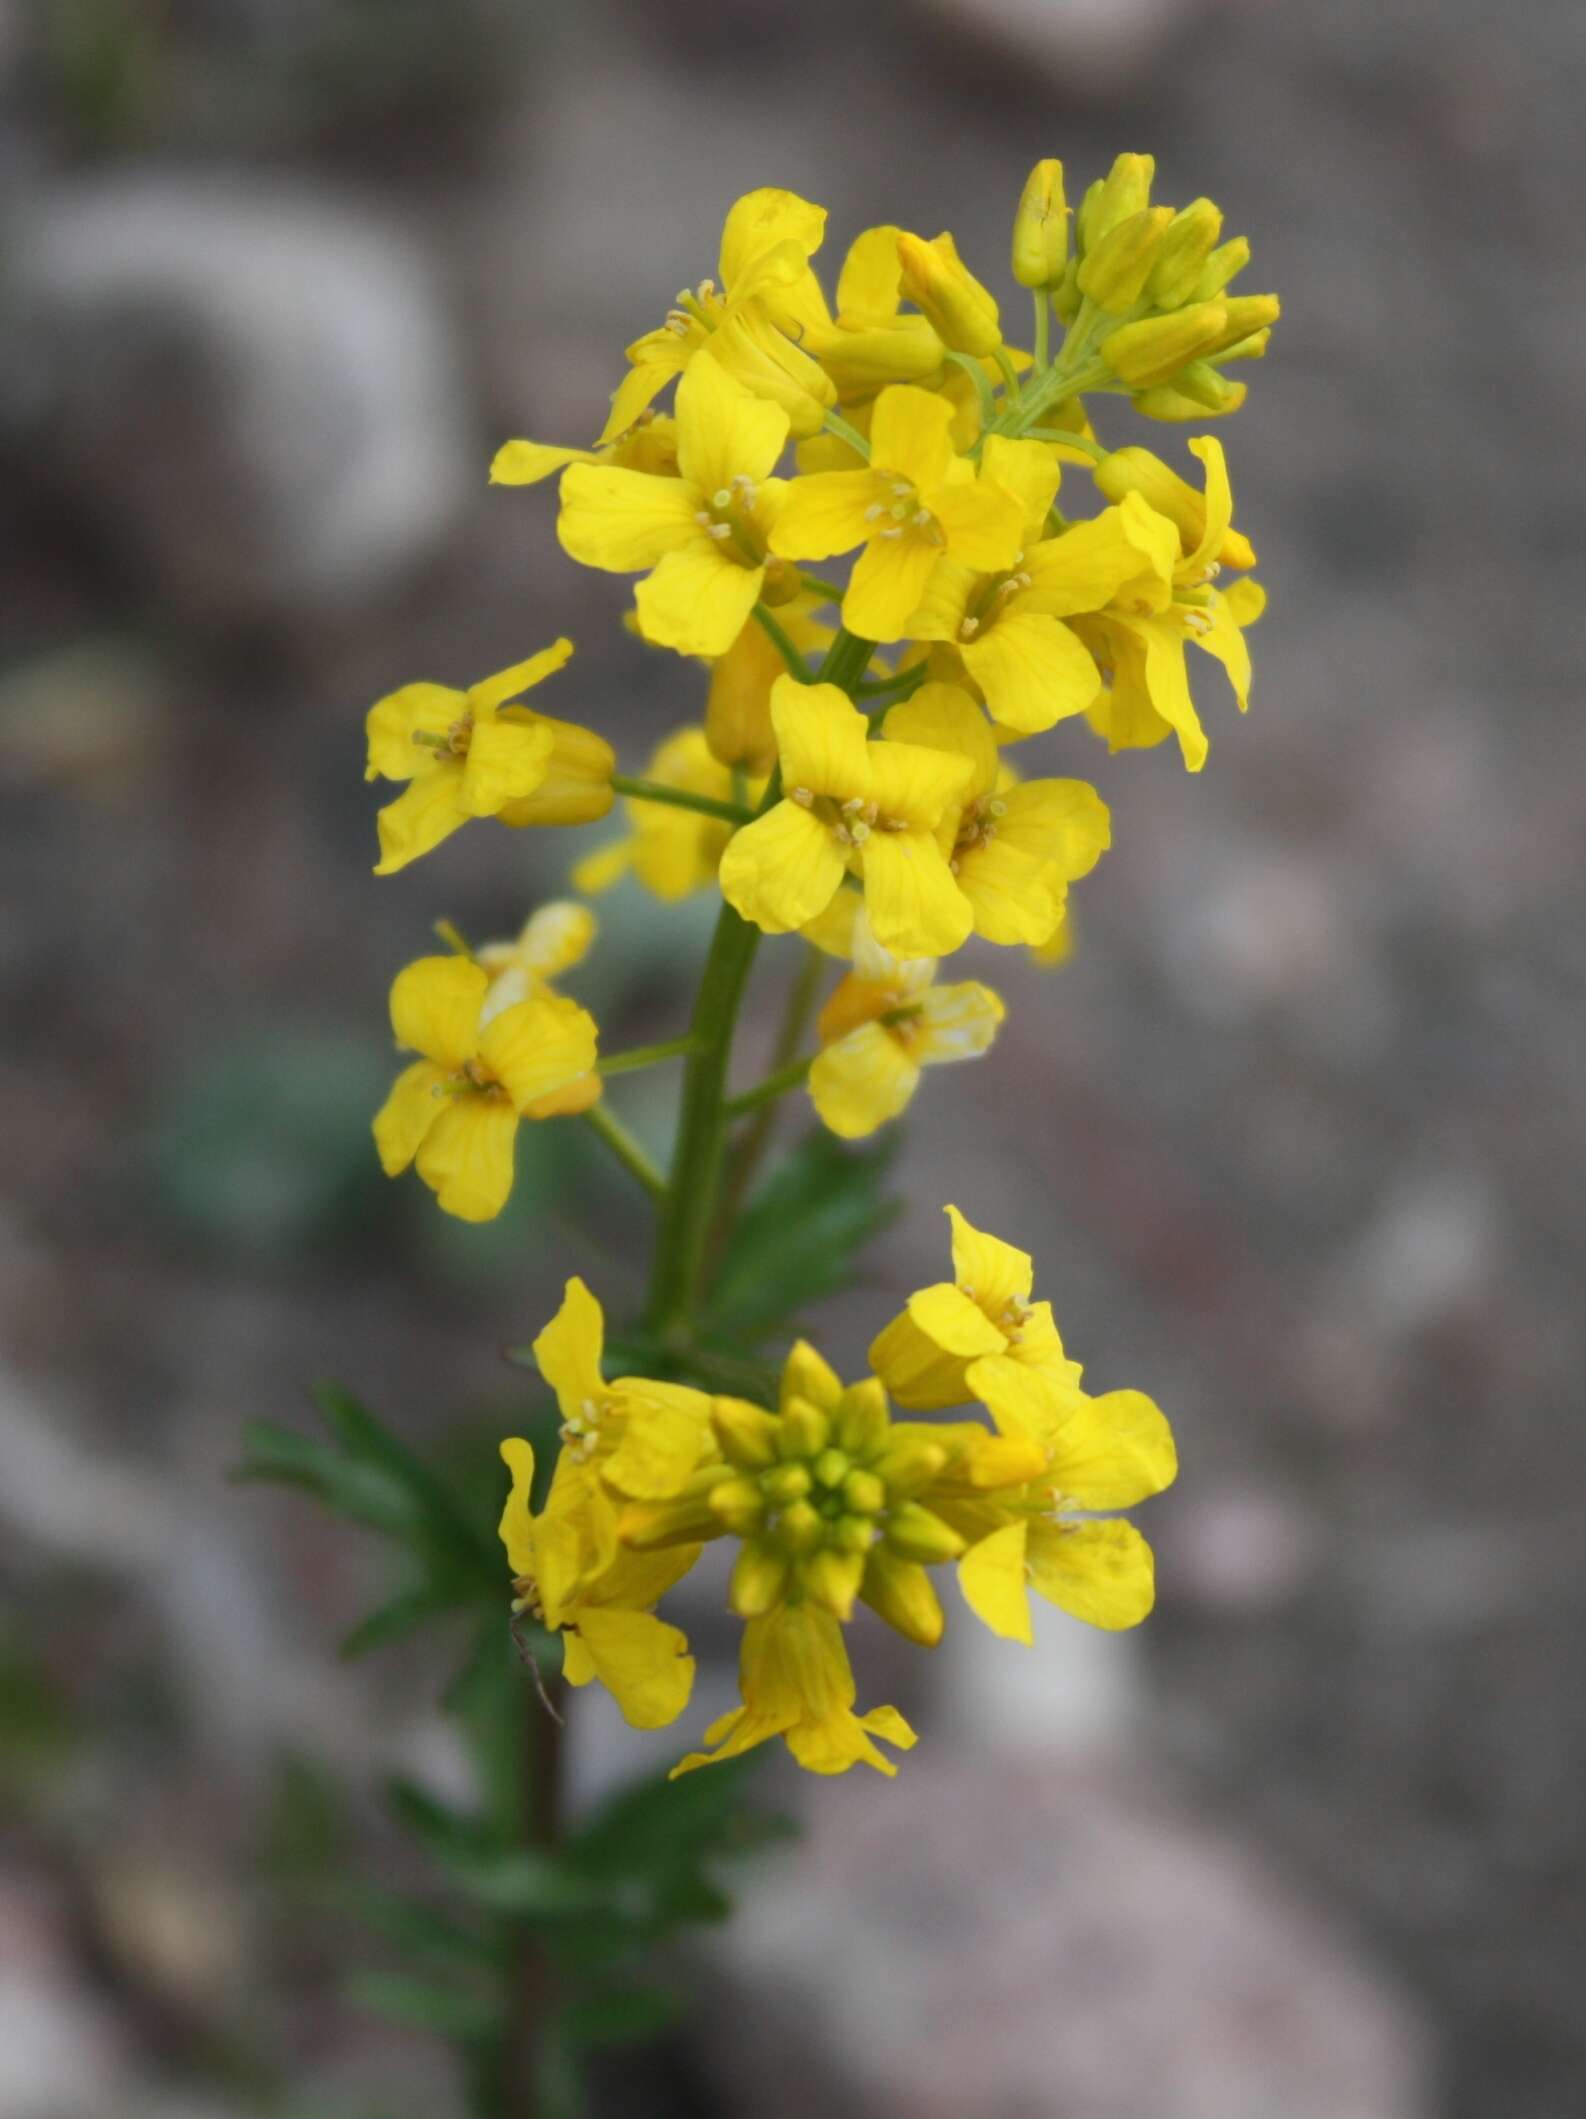 Image of winter-cress, yellow rocket